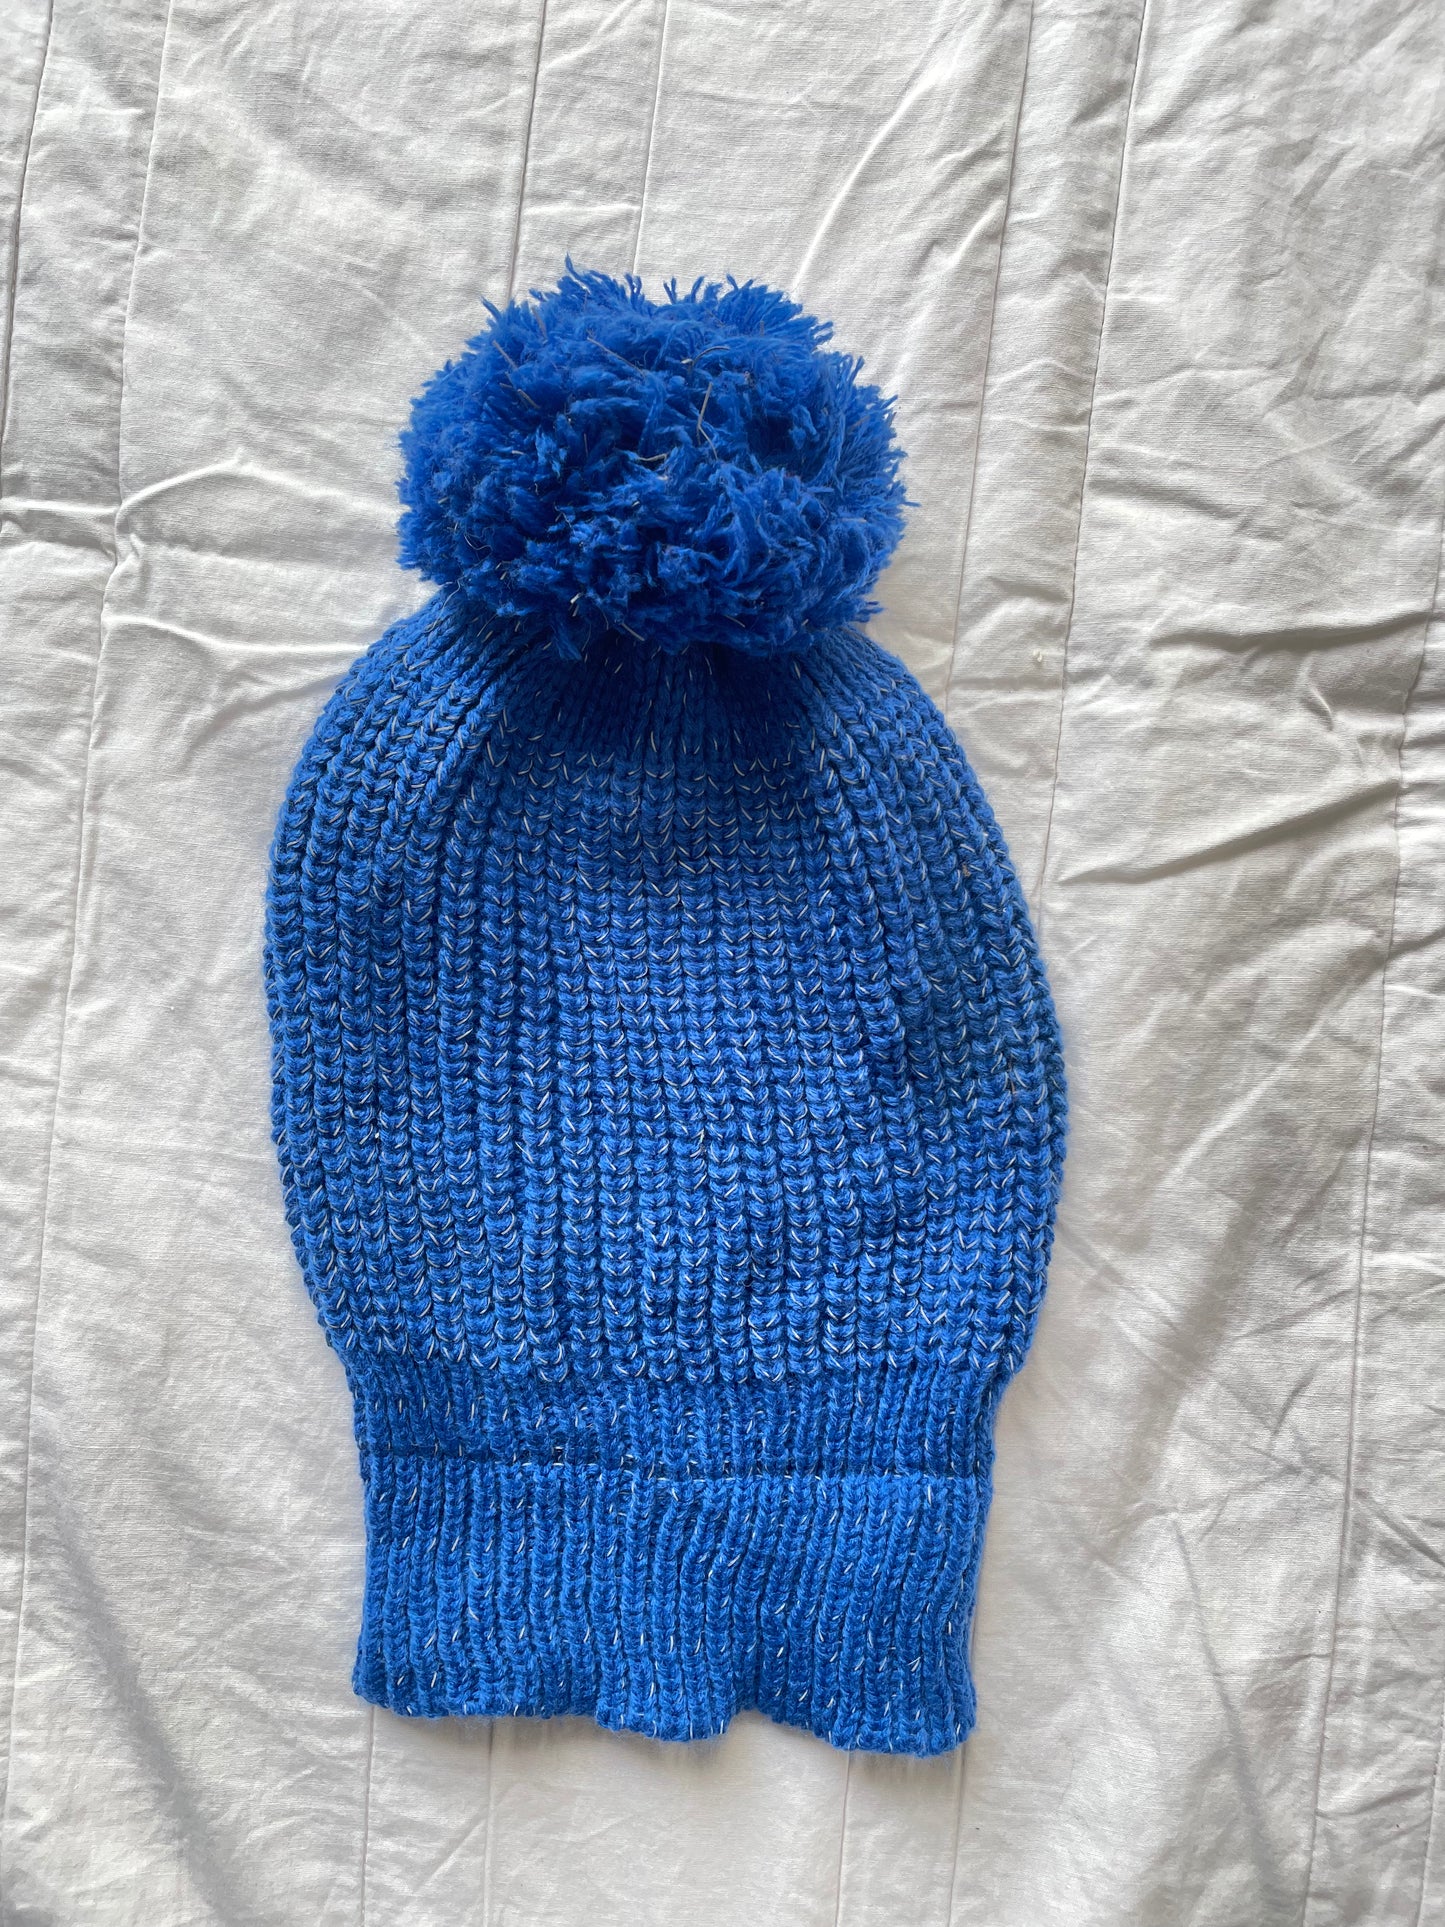 Blue Winter Cap